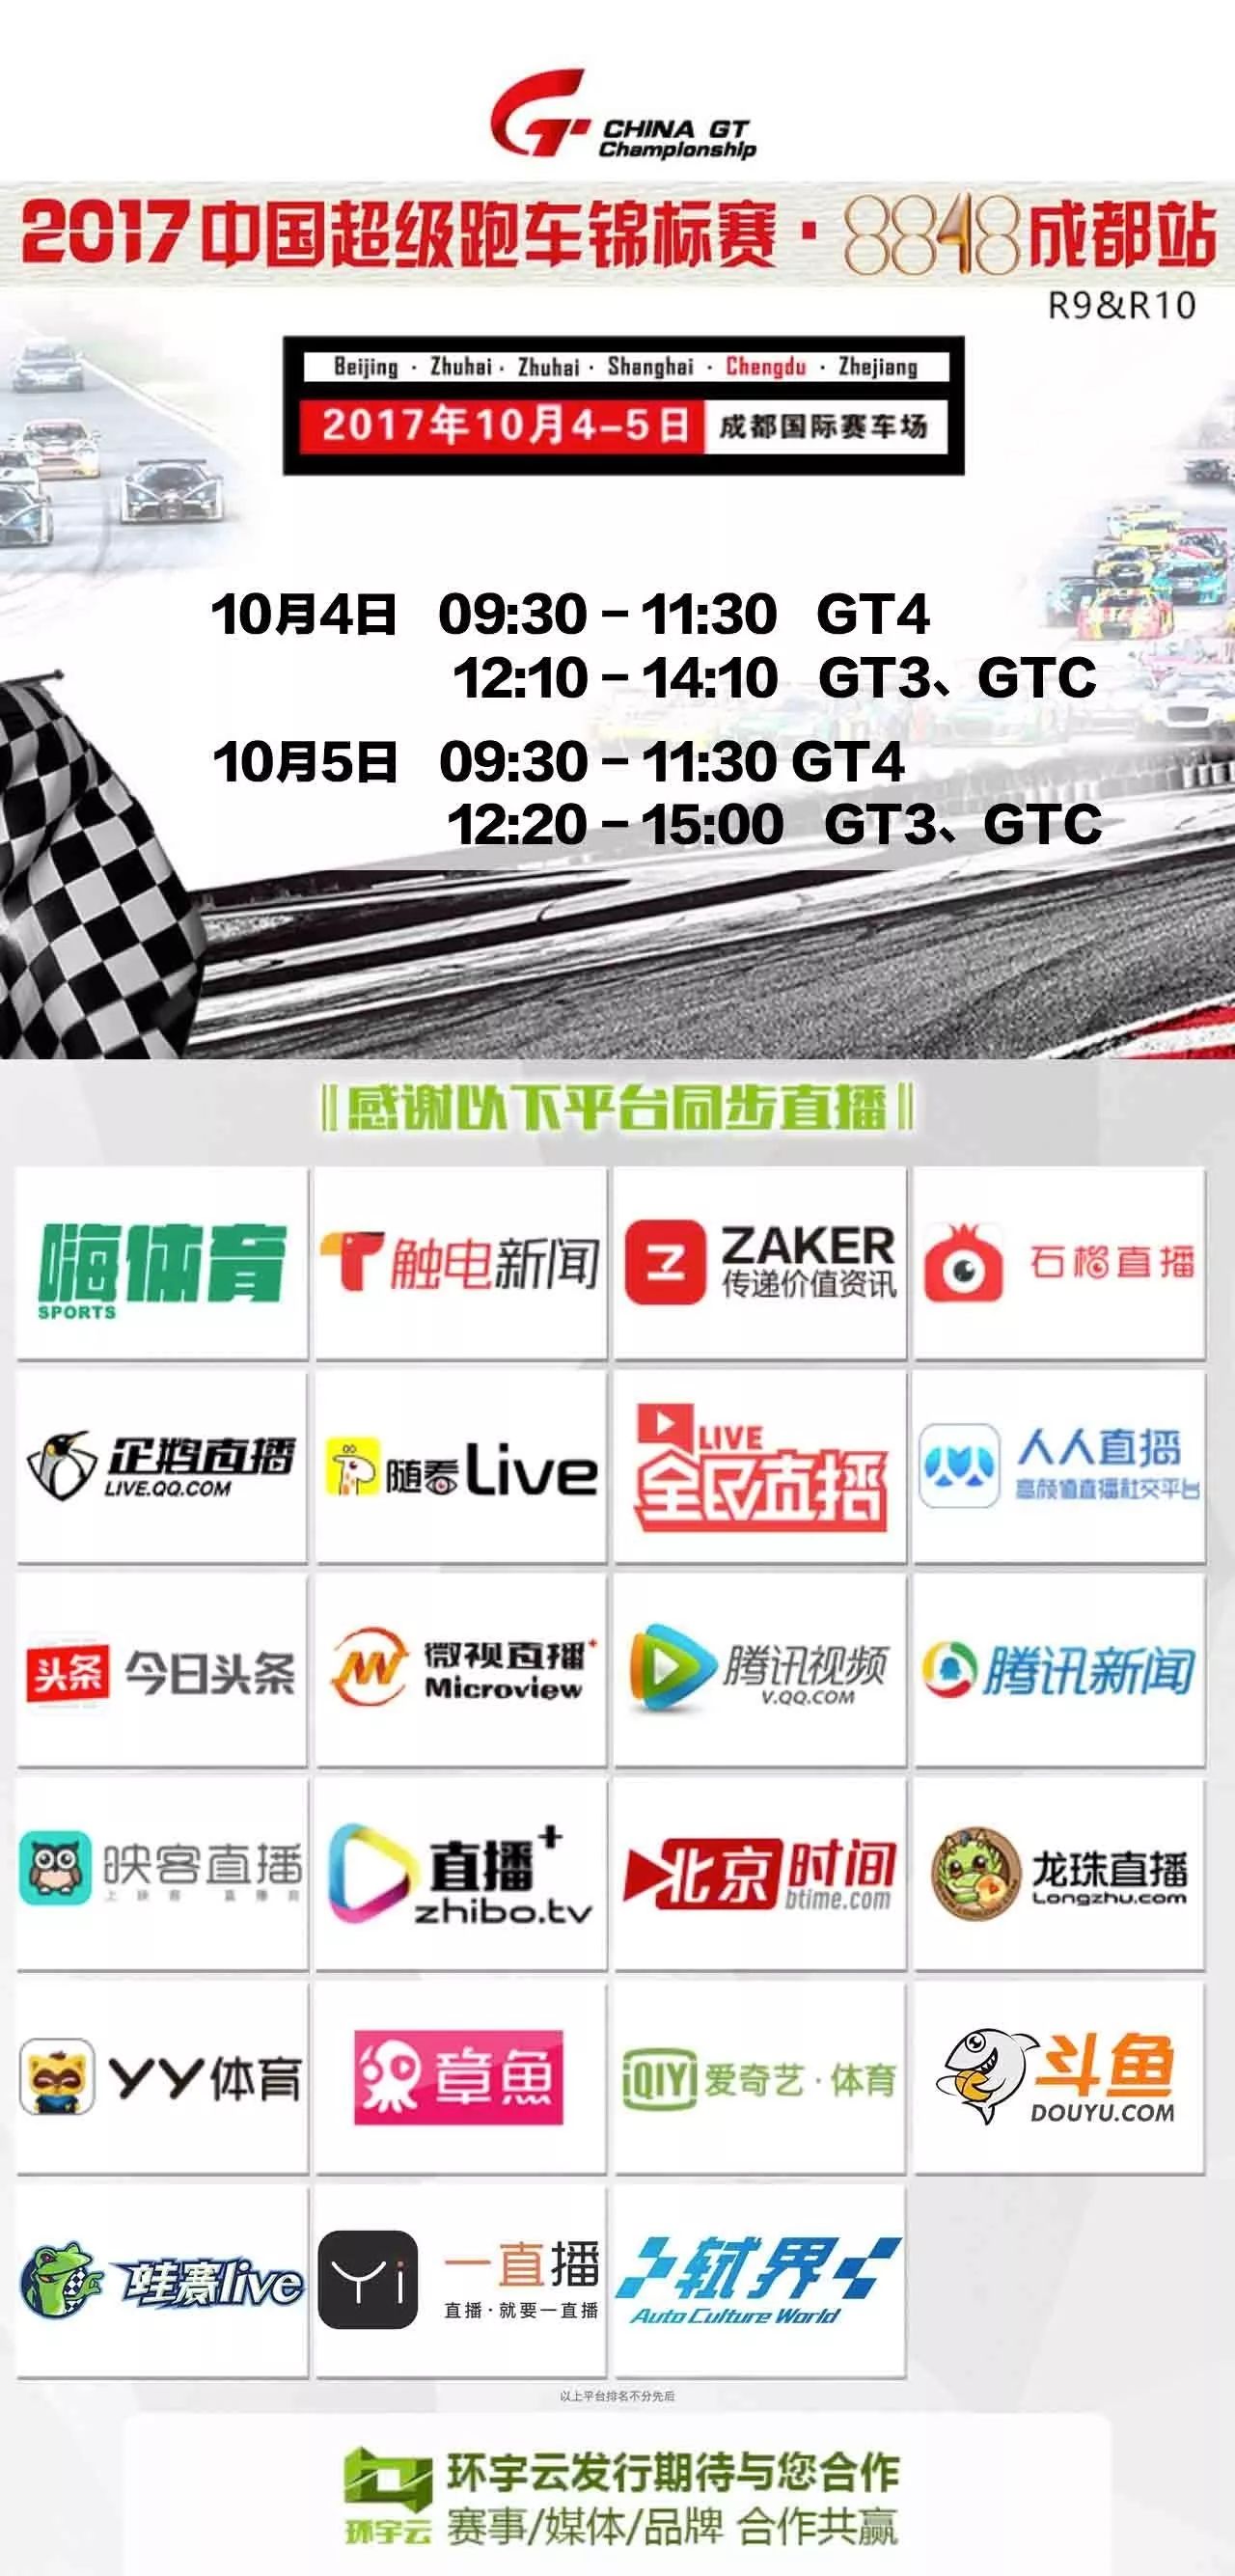 China GT Chengdu Weekend Pre-race Reactions